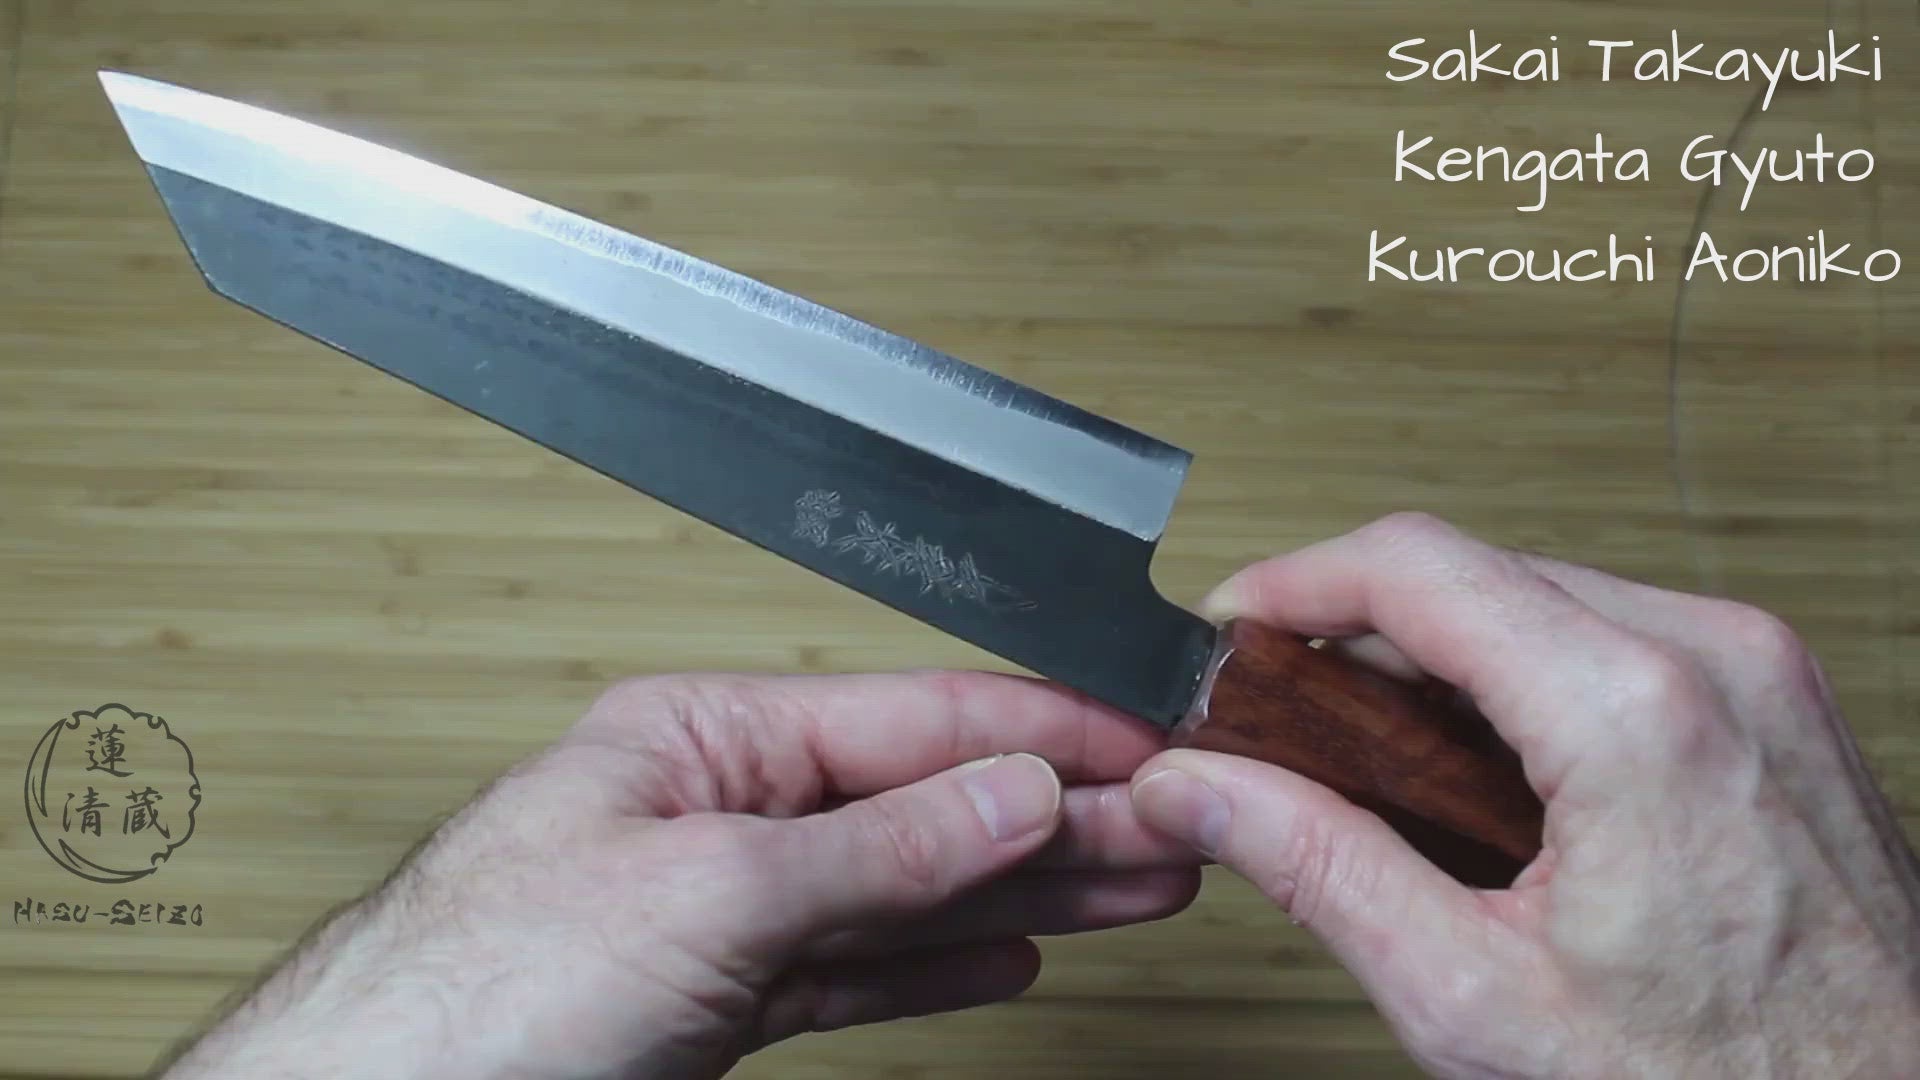 4 Piece Modern Kitchen Knife Set by Hast, Japanese Carbon Steel.